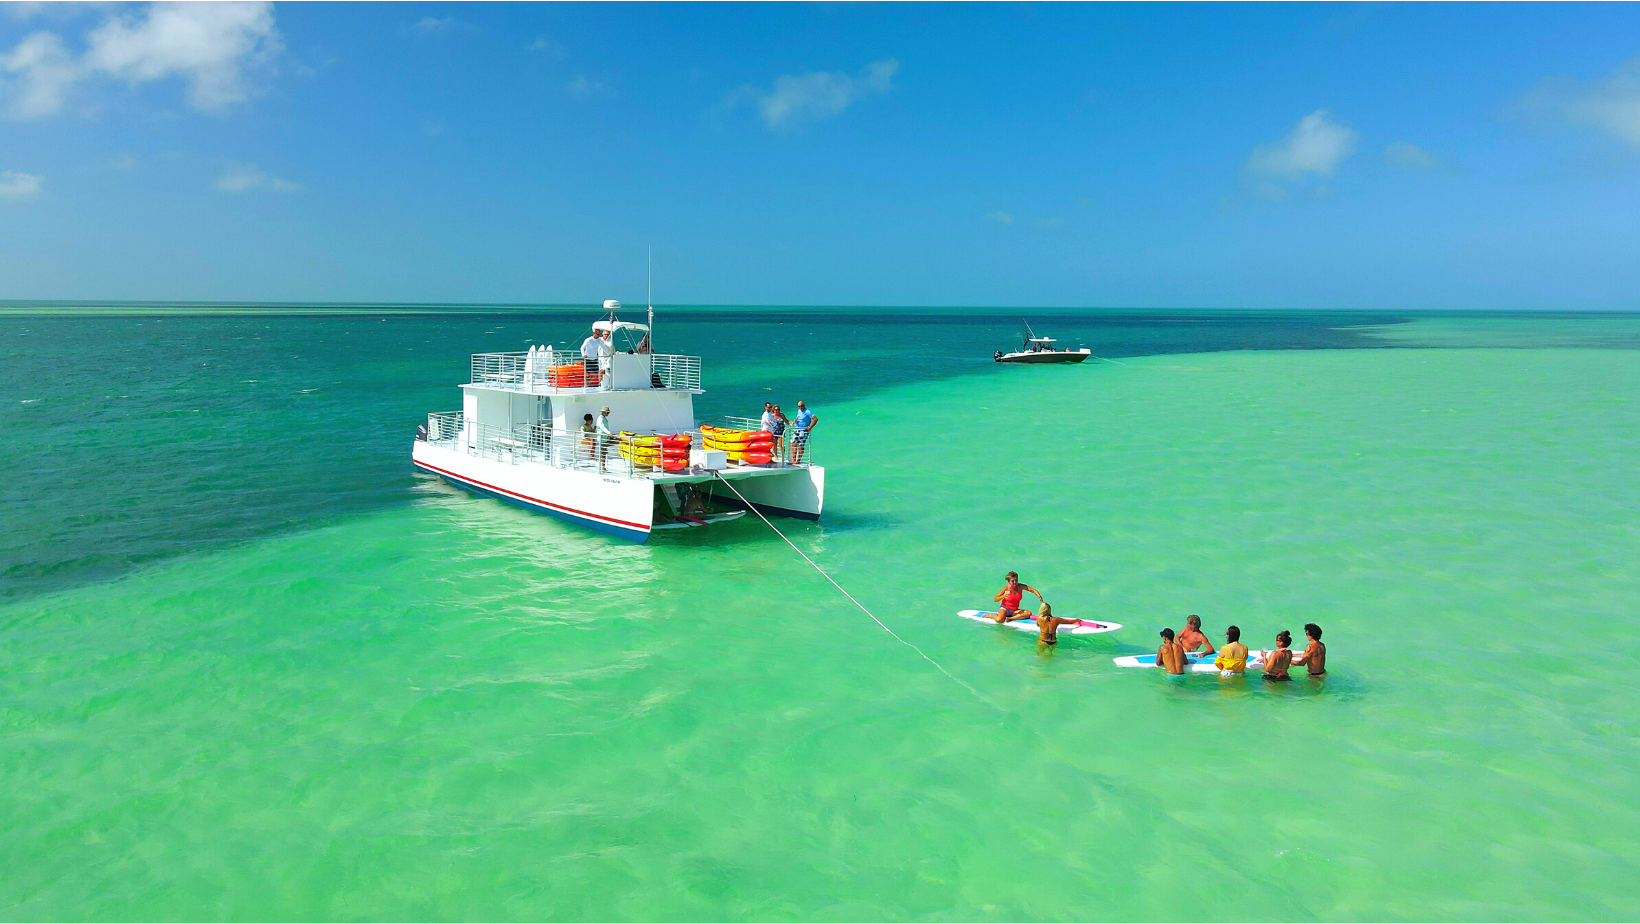 Sandbar Adventure Tour in Key West